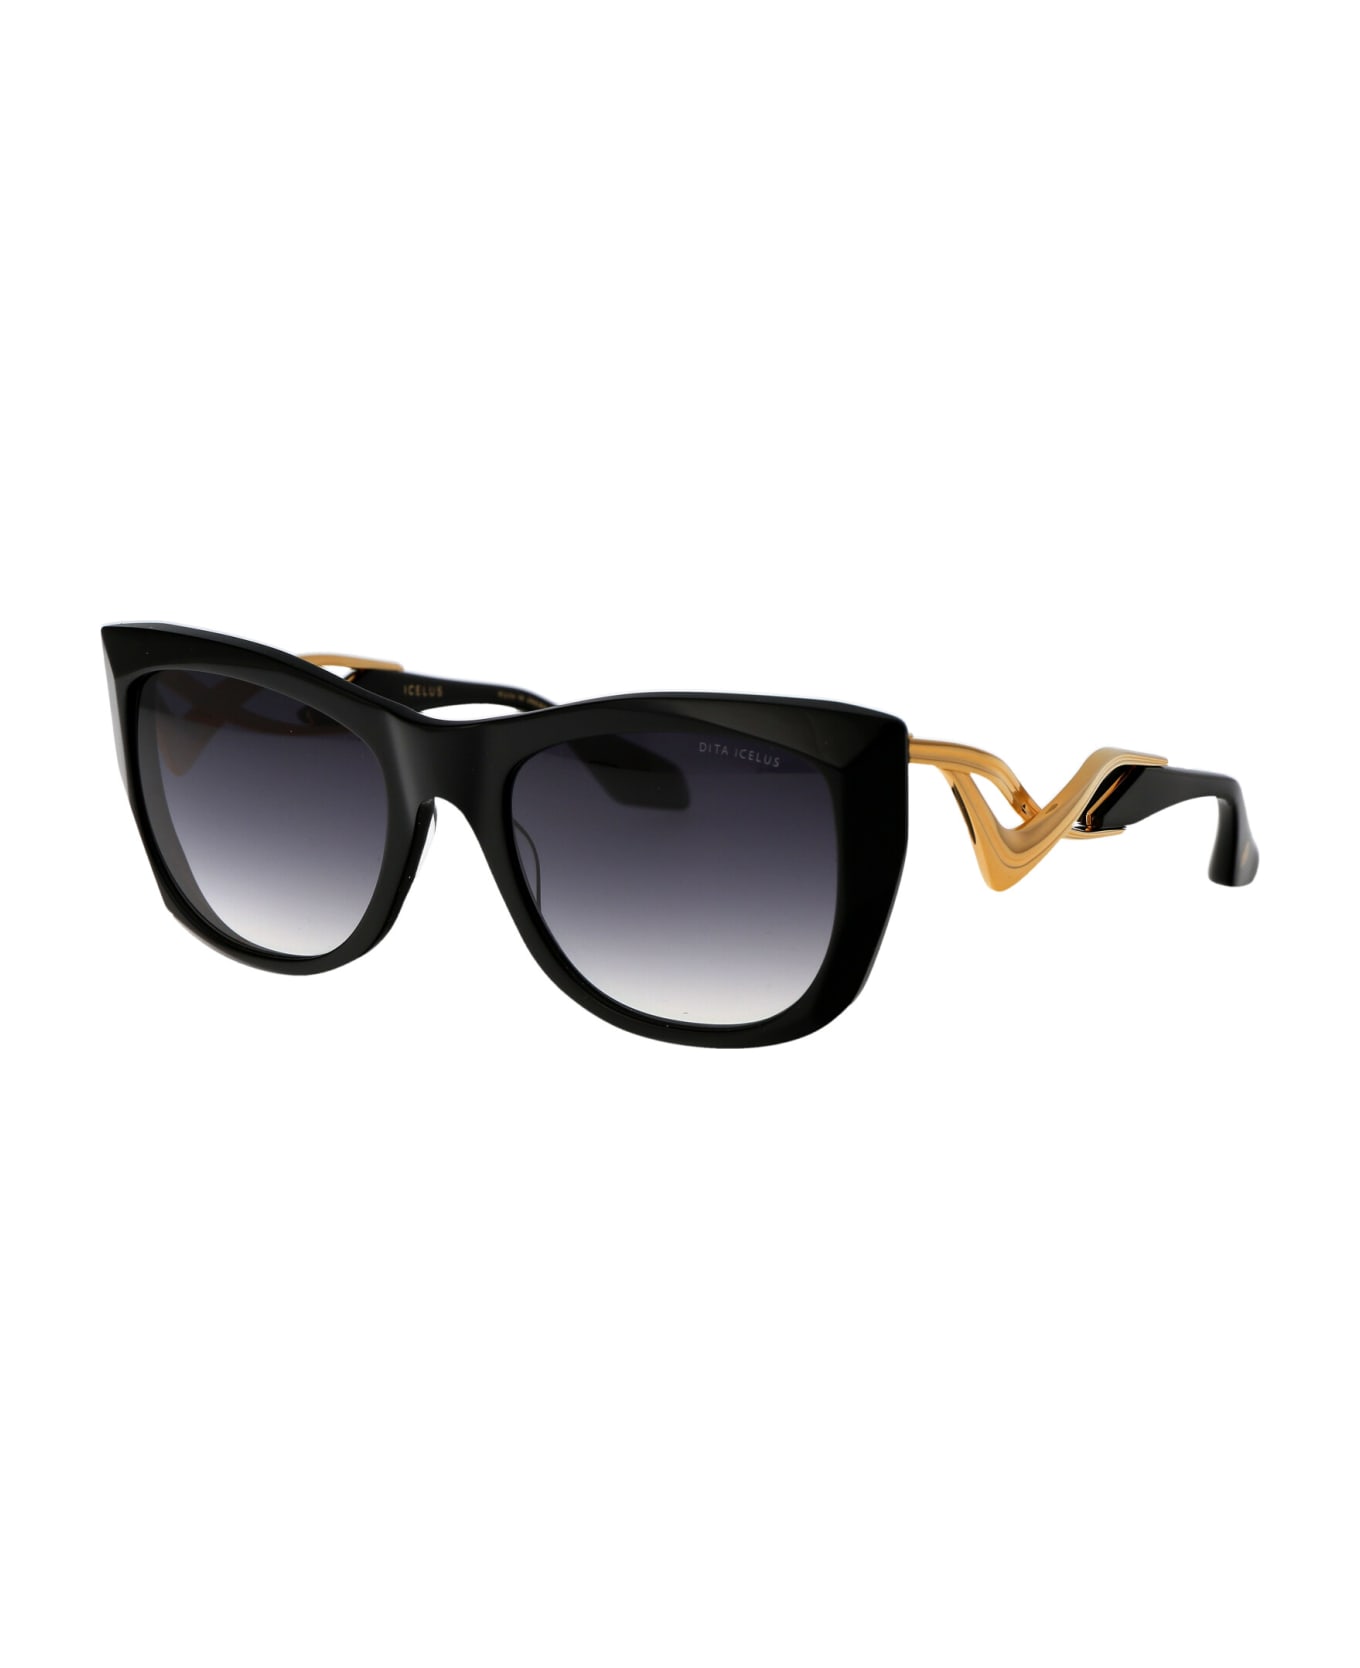 Dita Icelus Sunglasses - 001 BLACK YELLOW GOLD